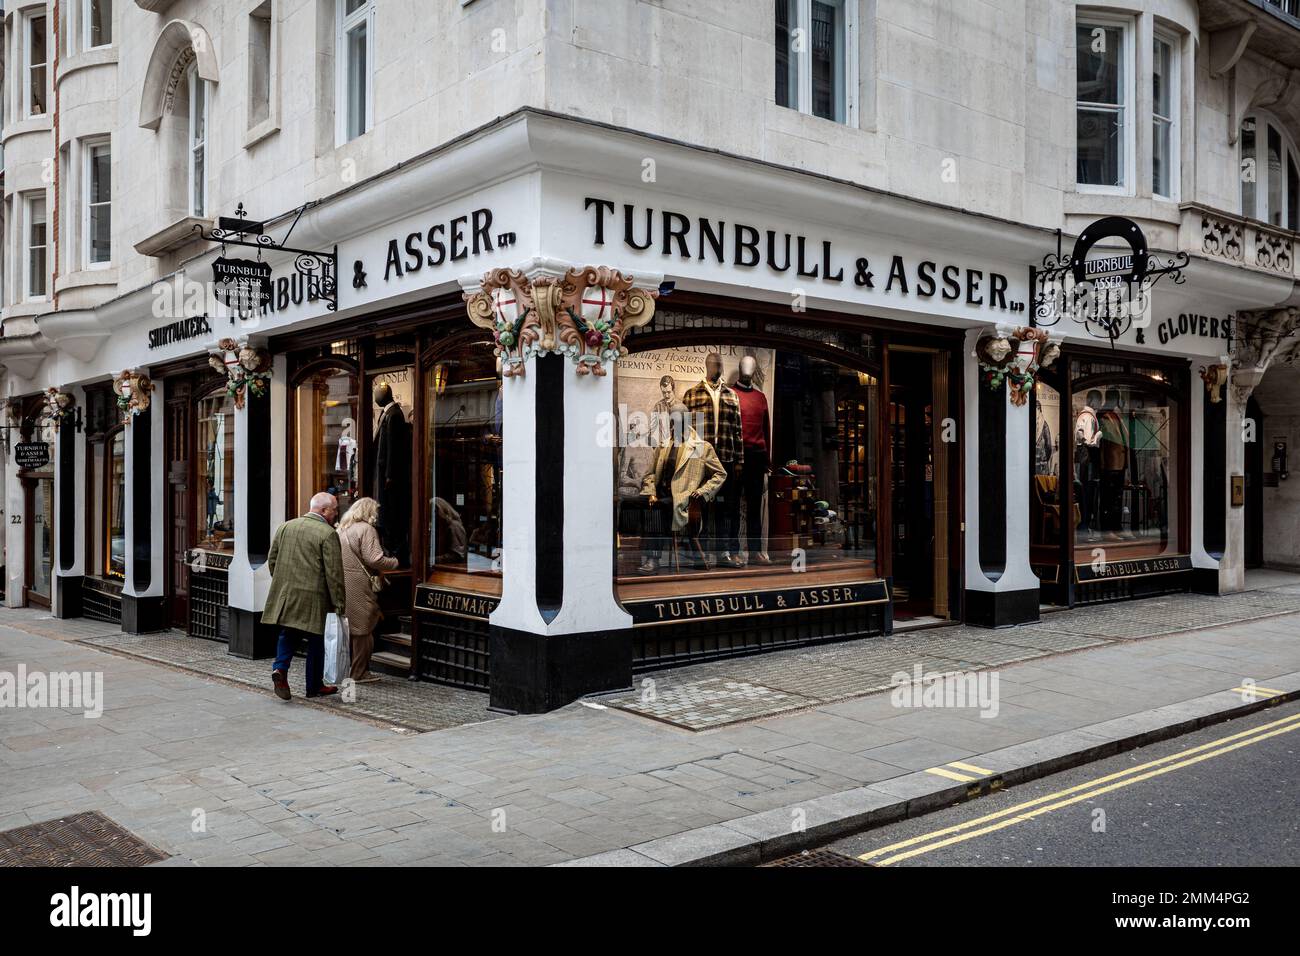 Turnbull & Asser Jermyn Street St James's London. Turnbull and Asser is a British shirt-maker established in 1885, flagship store, Jermyn St London. Stock Photo